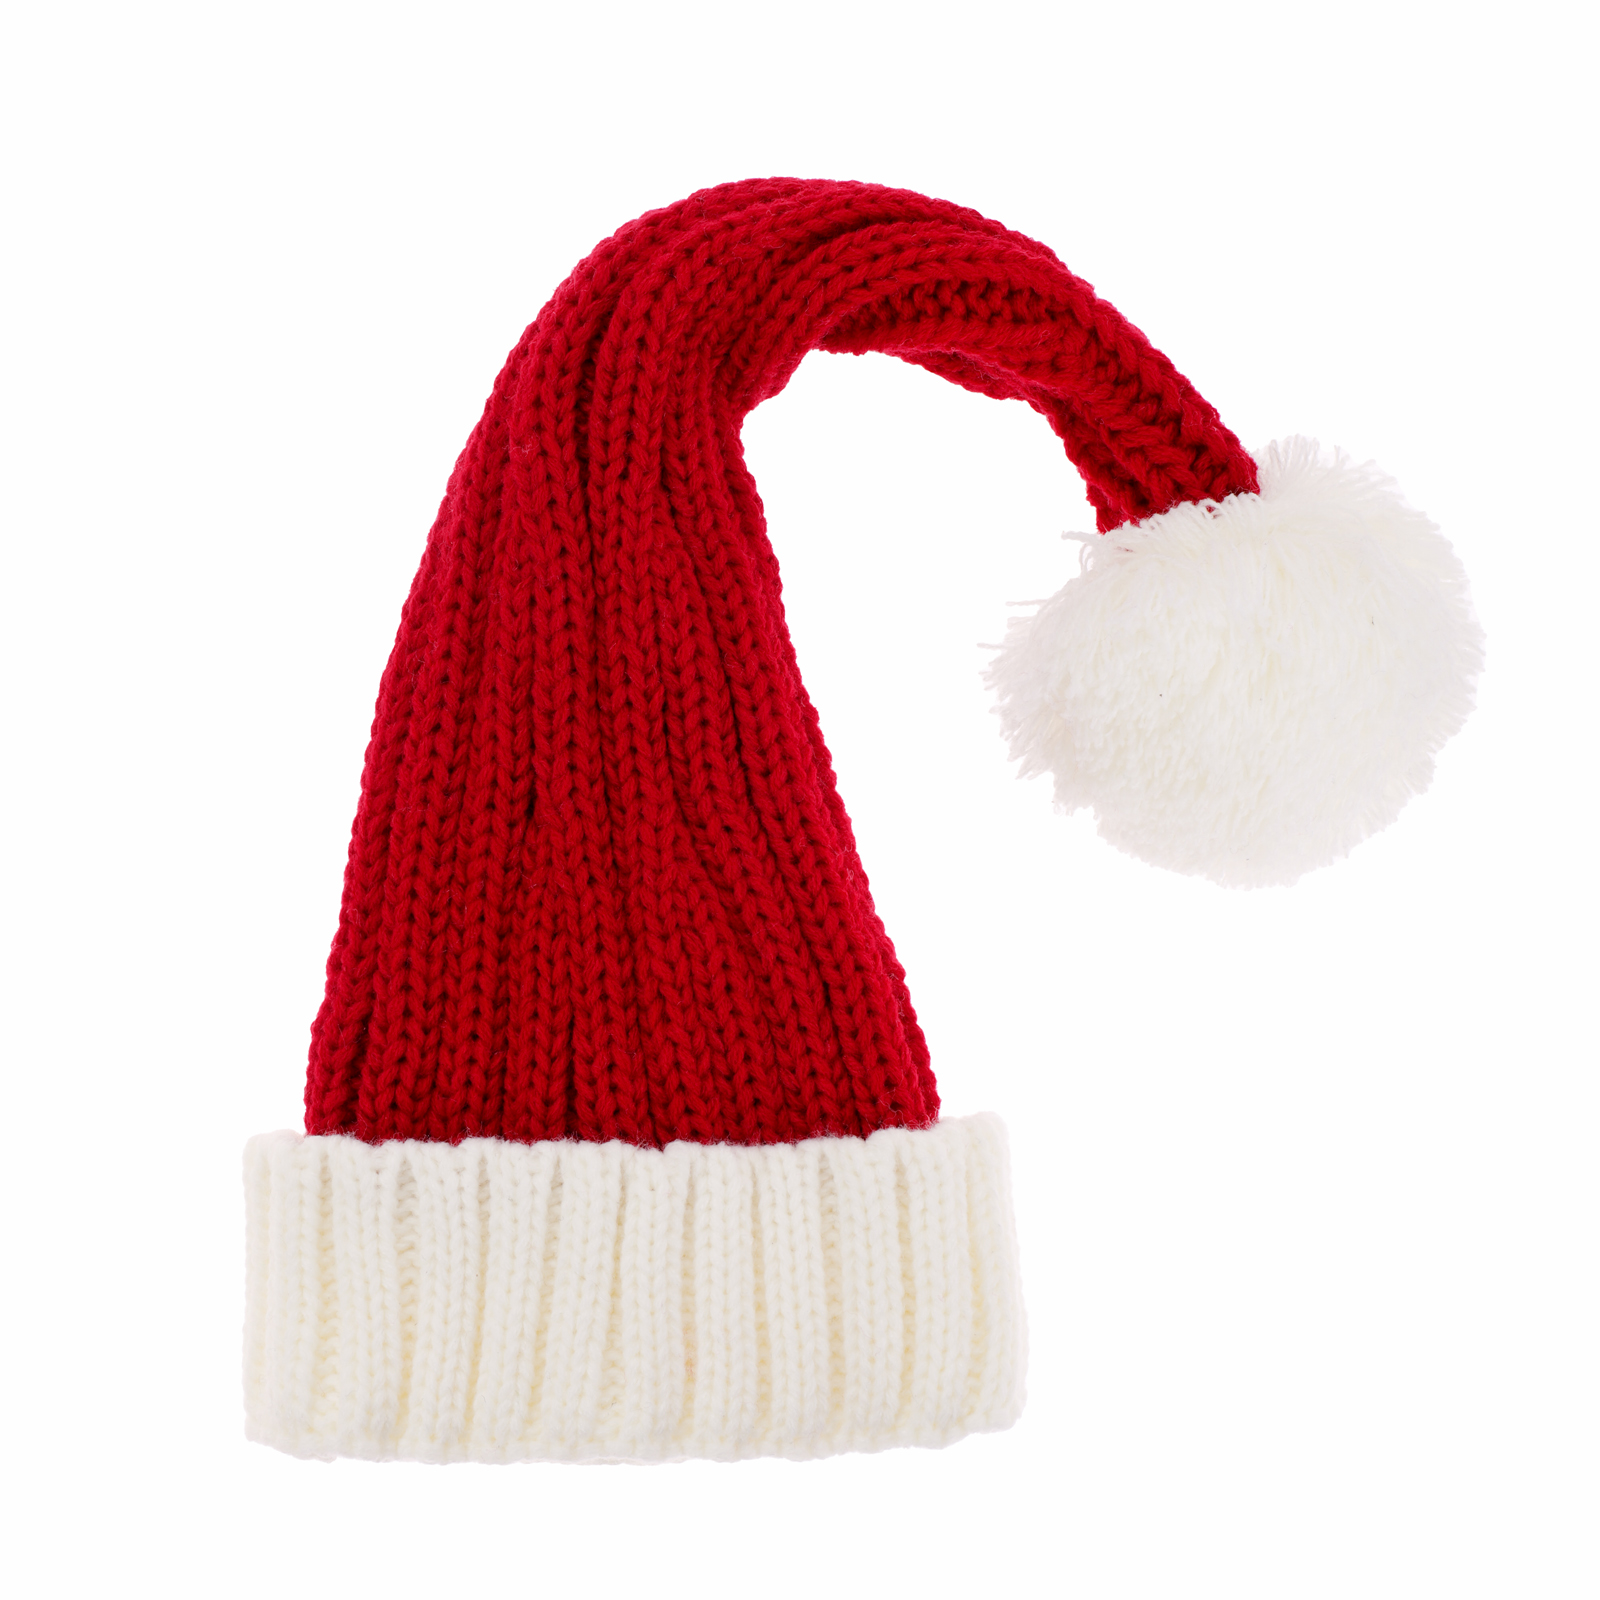 Coarse knit red/white